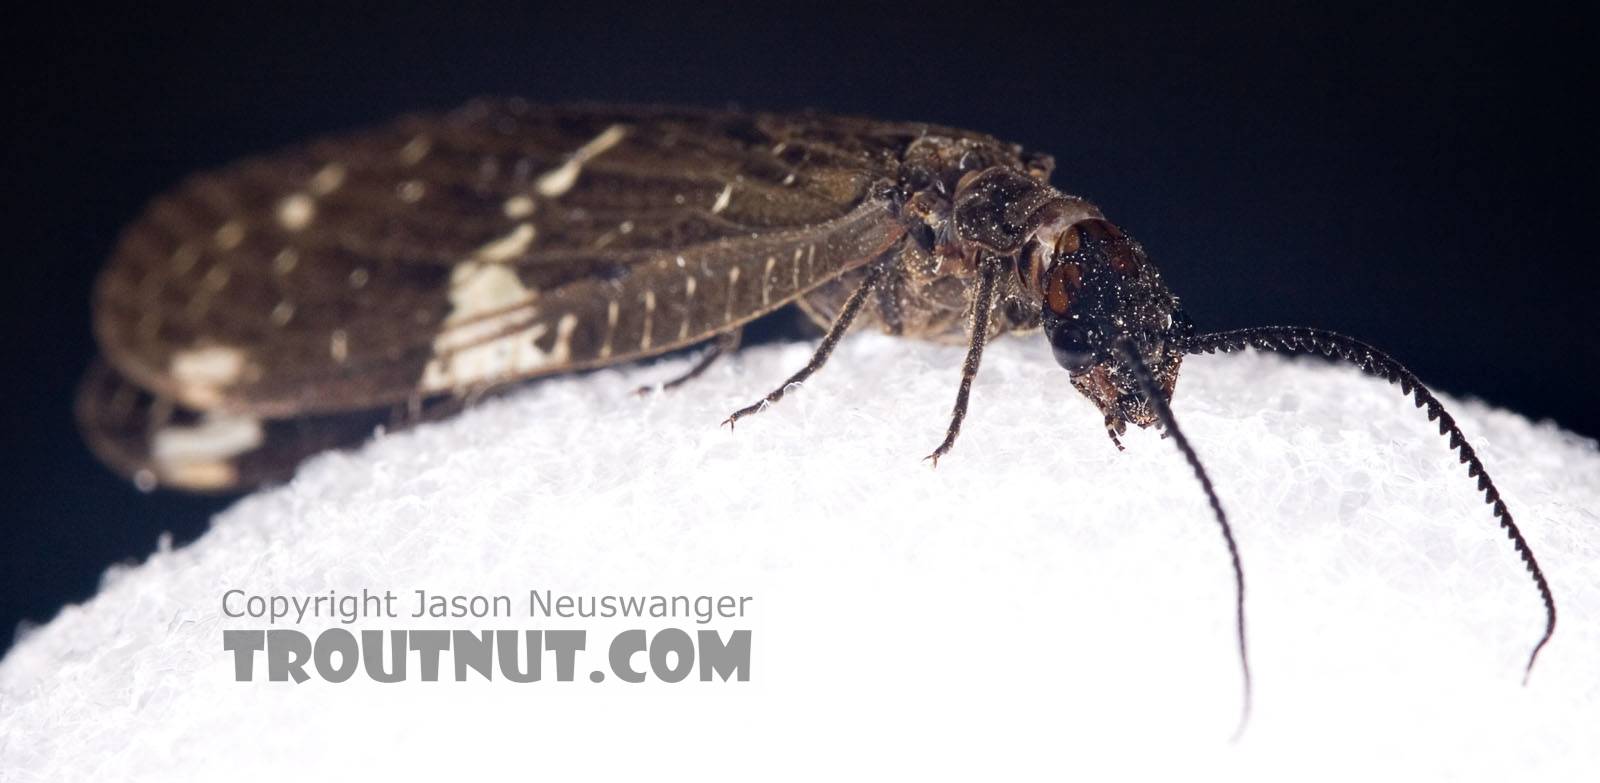 Male Nigronia serricornis (Fishfly) Hellgrammite Adult from Brodhead Creek in Pennsylvania